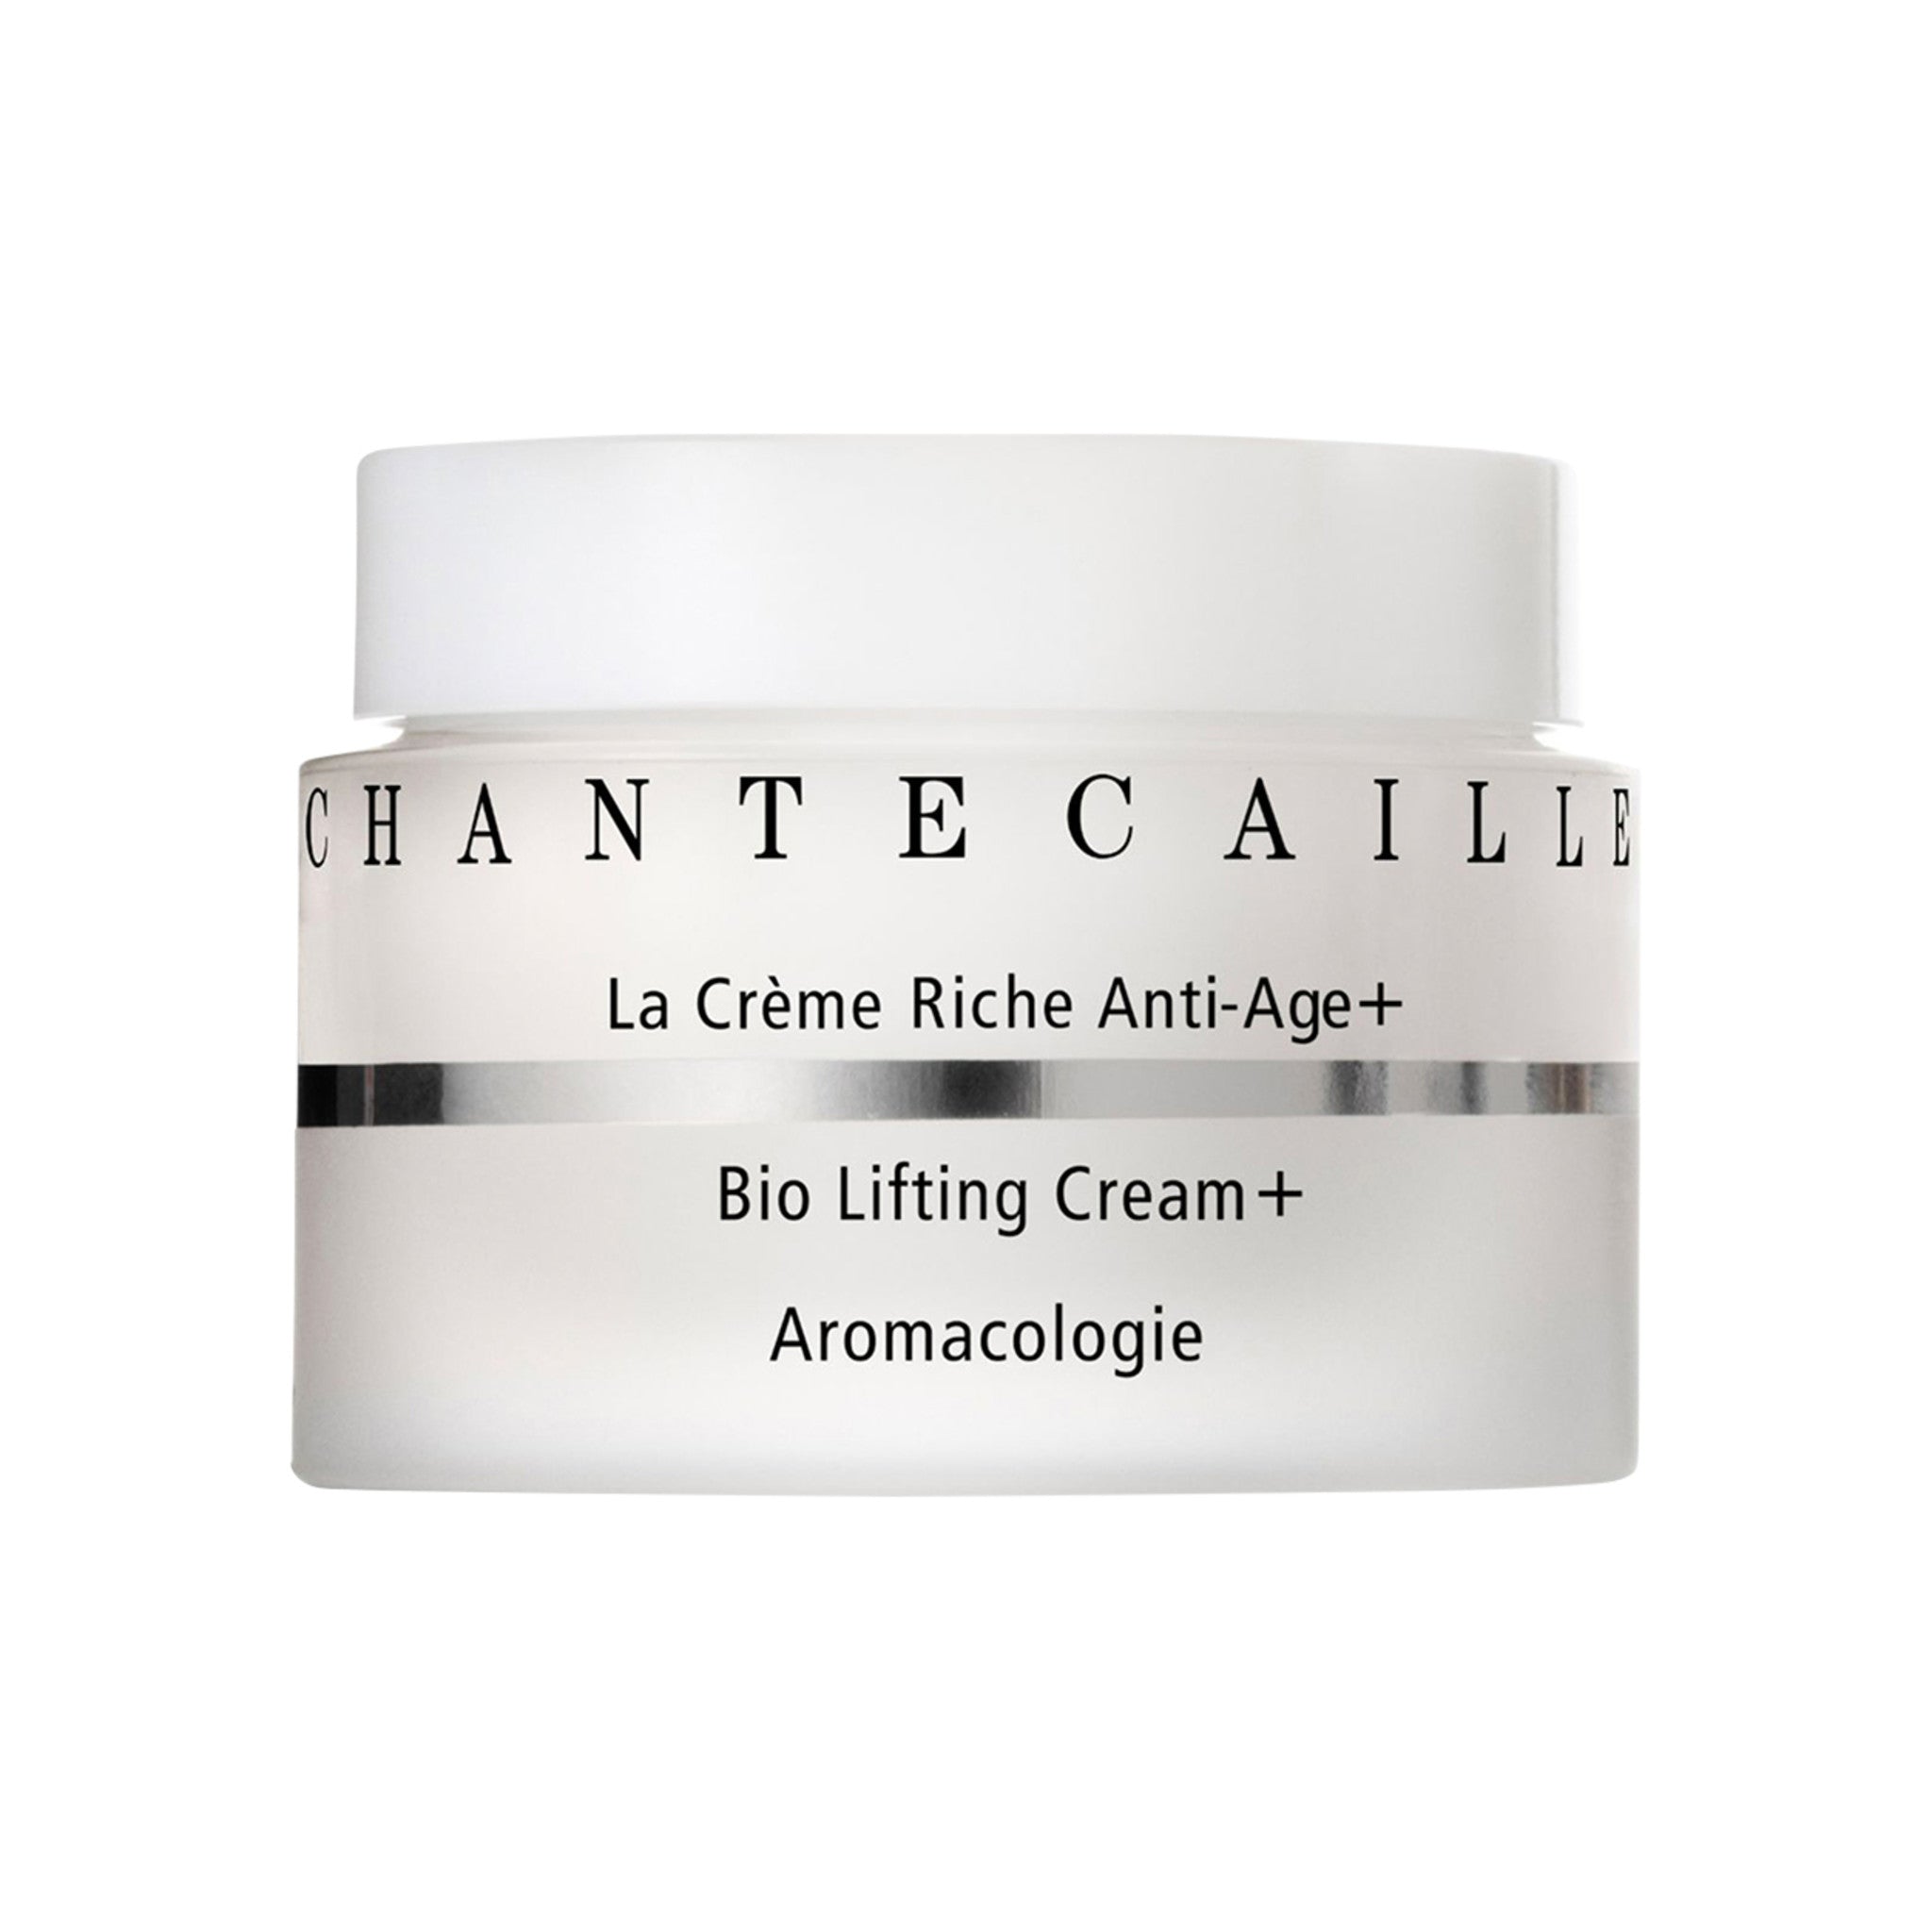 Chantecaille Bio Lifting Cream+ Size variant: 1.7 fl oz main image.